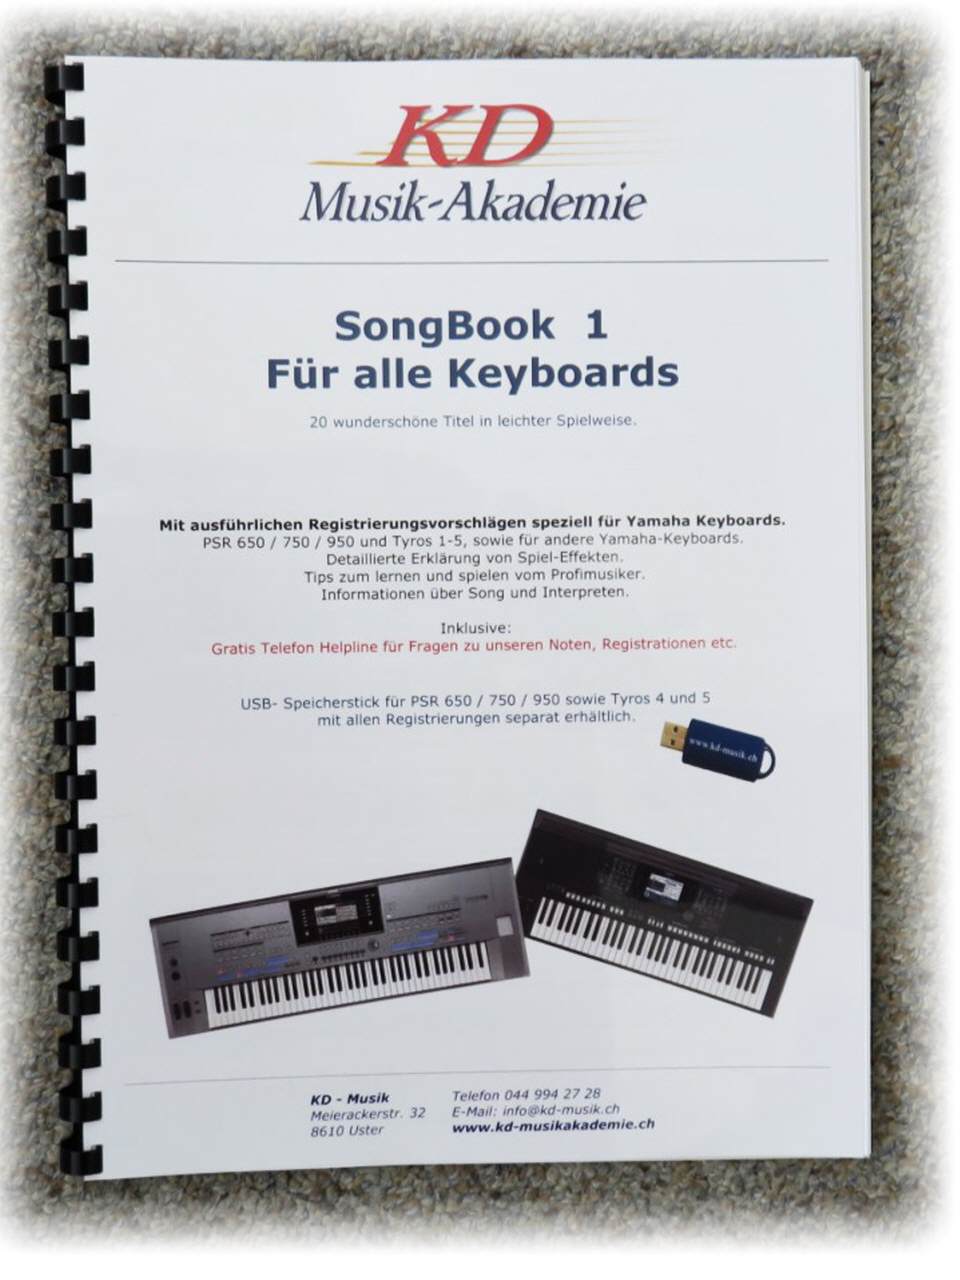 SongBook Yamaha Keyboards